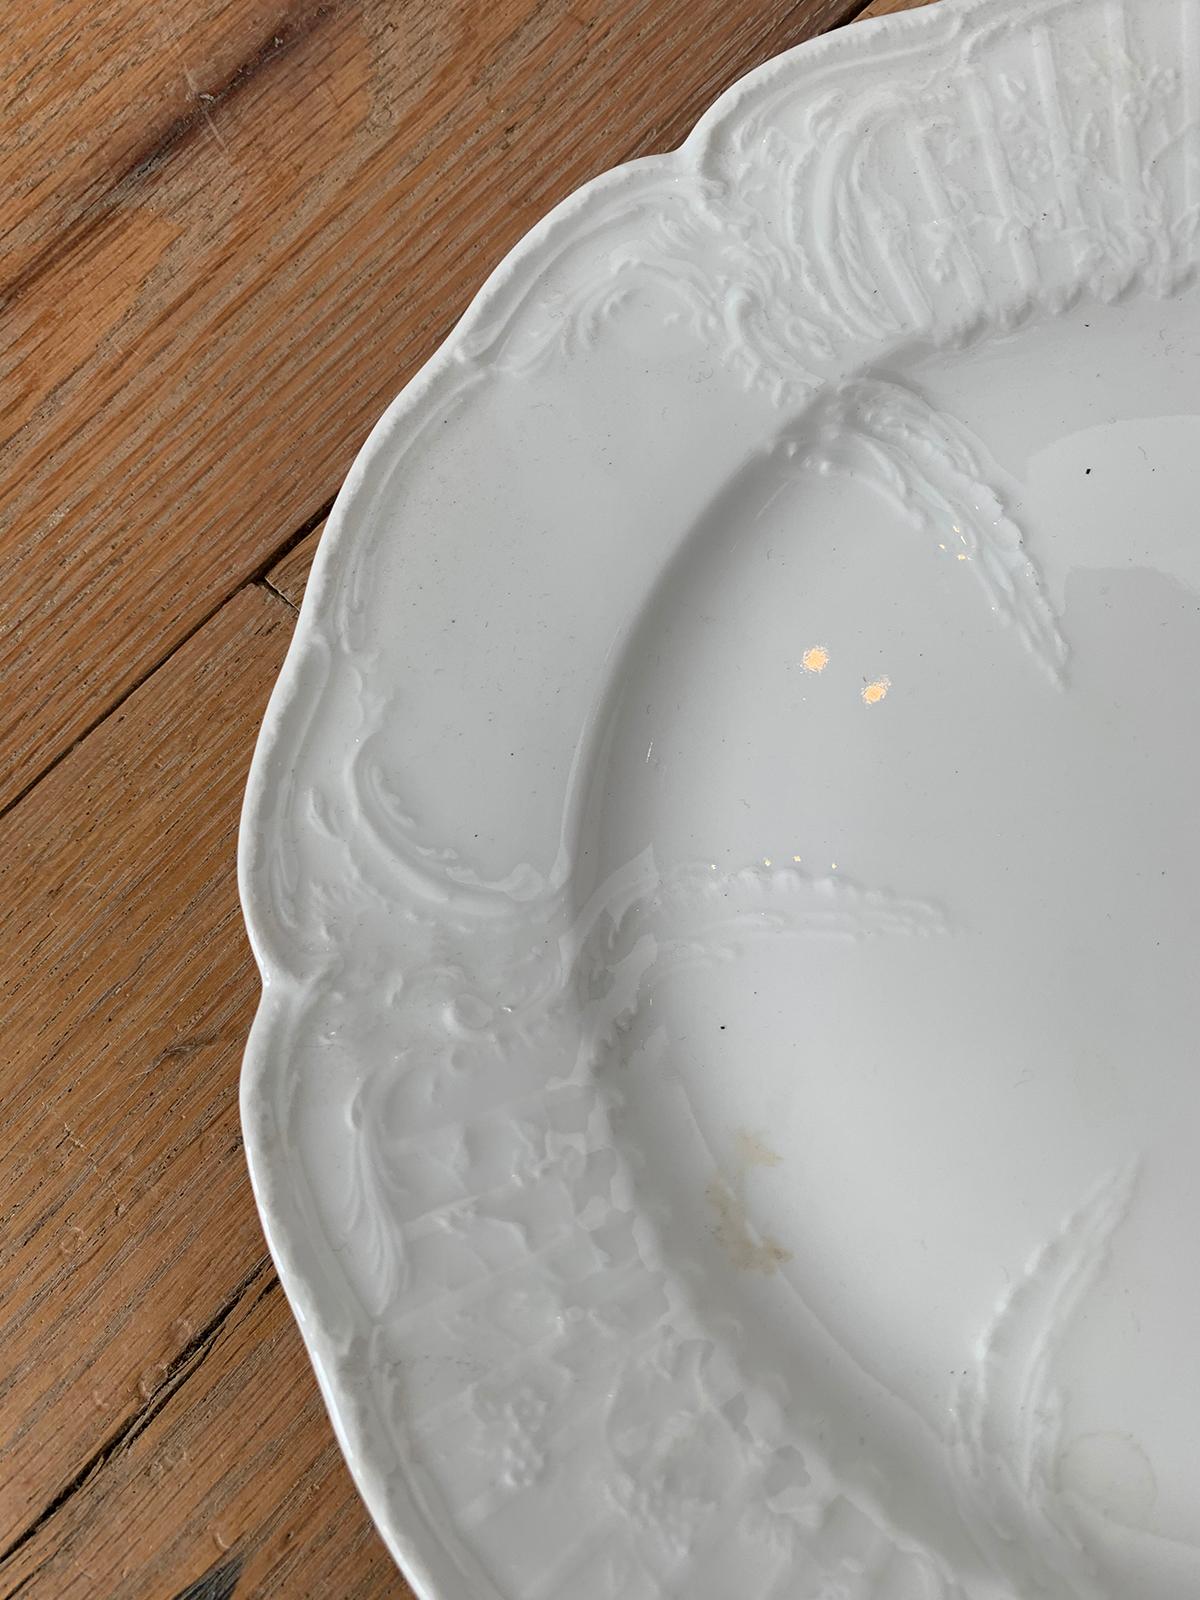 German Berlin Royal Vienna Style White Porcelain Plate by KPM Neuosier For Sale 4